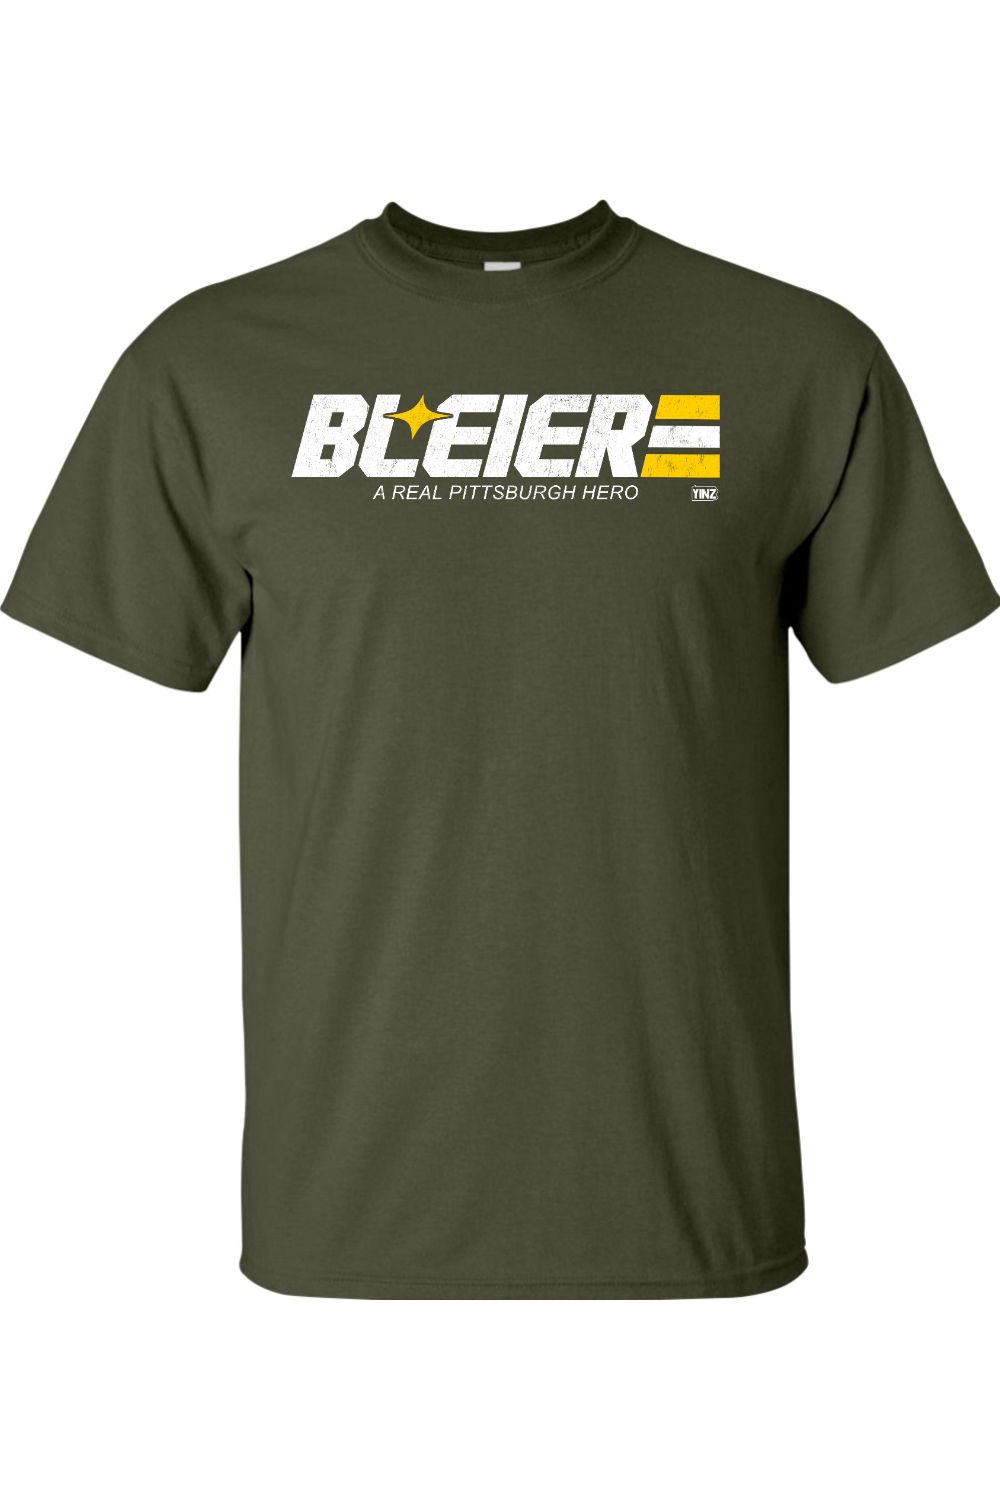 Bleier - A Real Pittsburgh Hero - Big & Tall Tee - Yinzylvania